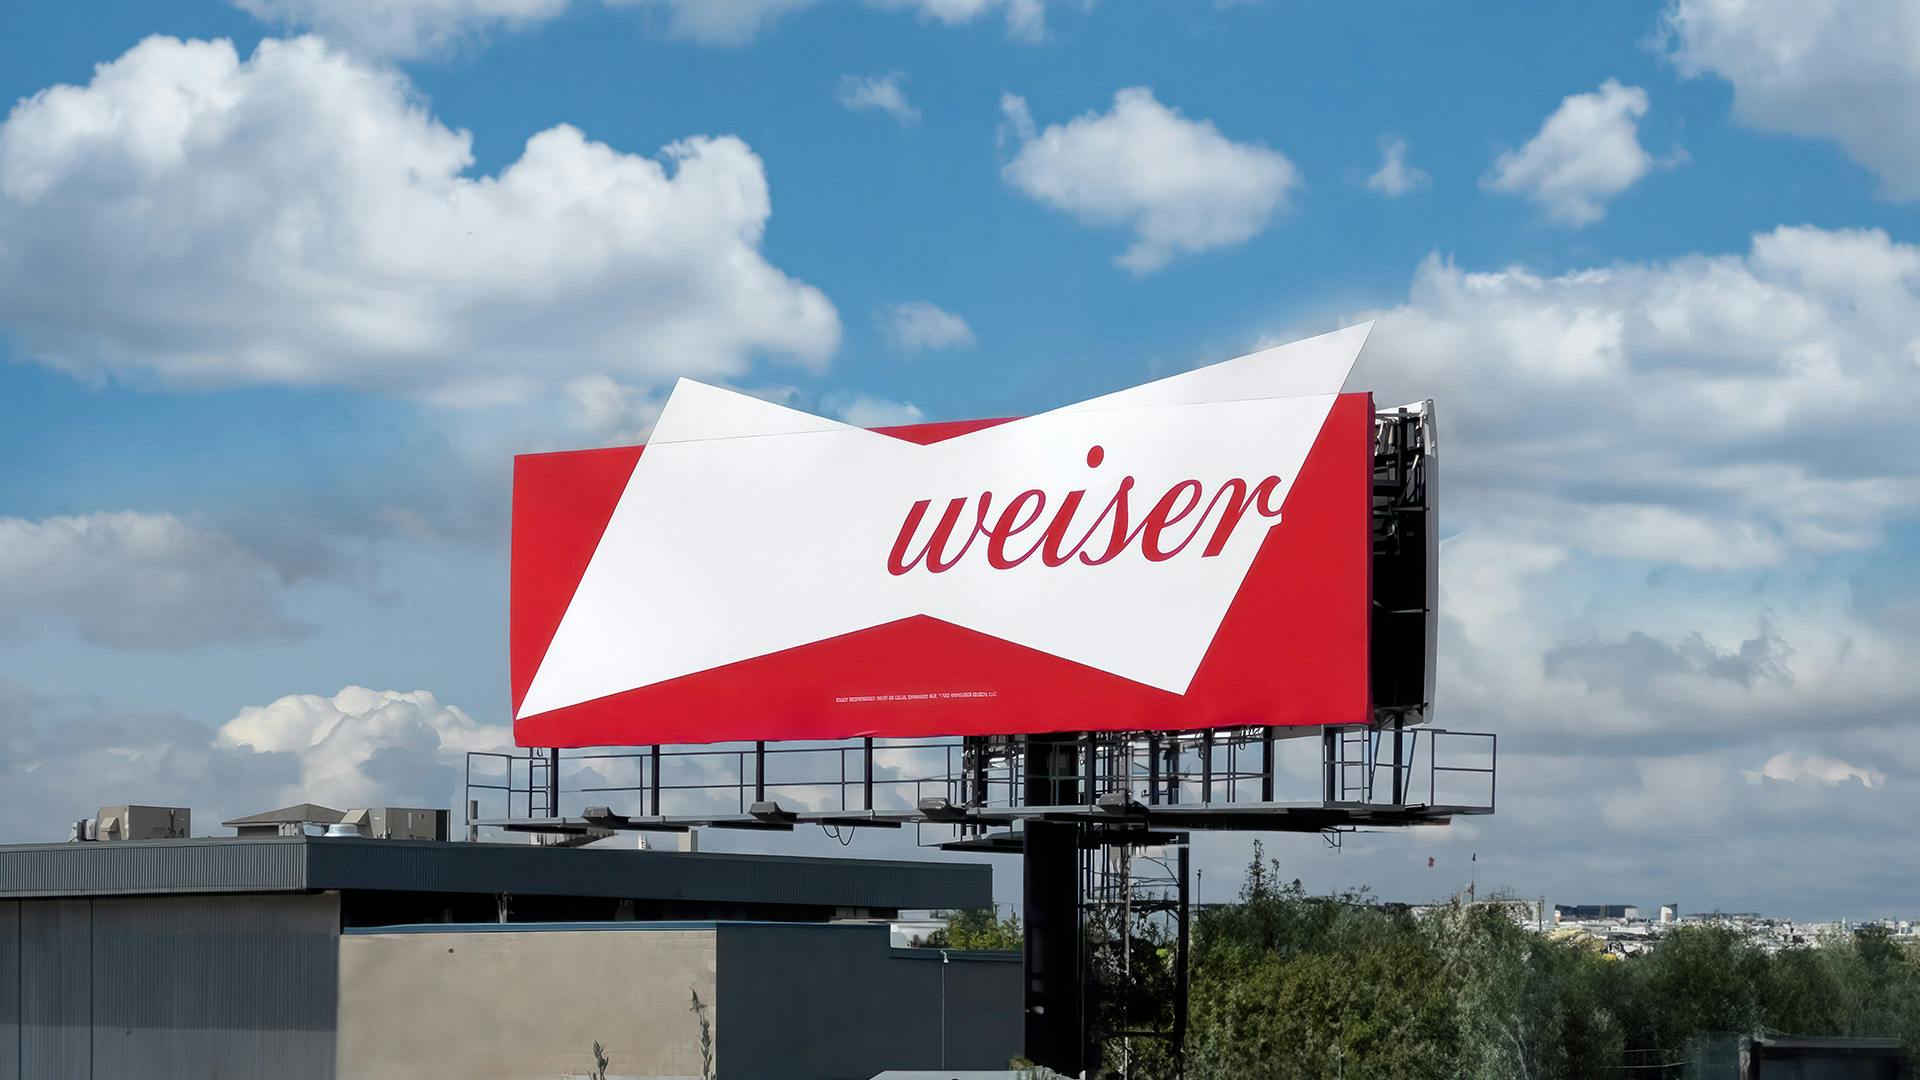 Bud_Weiser Billboard_16x9